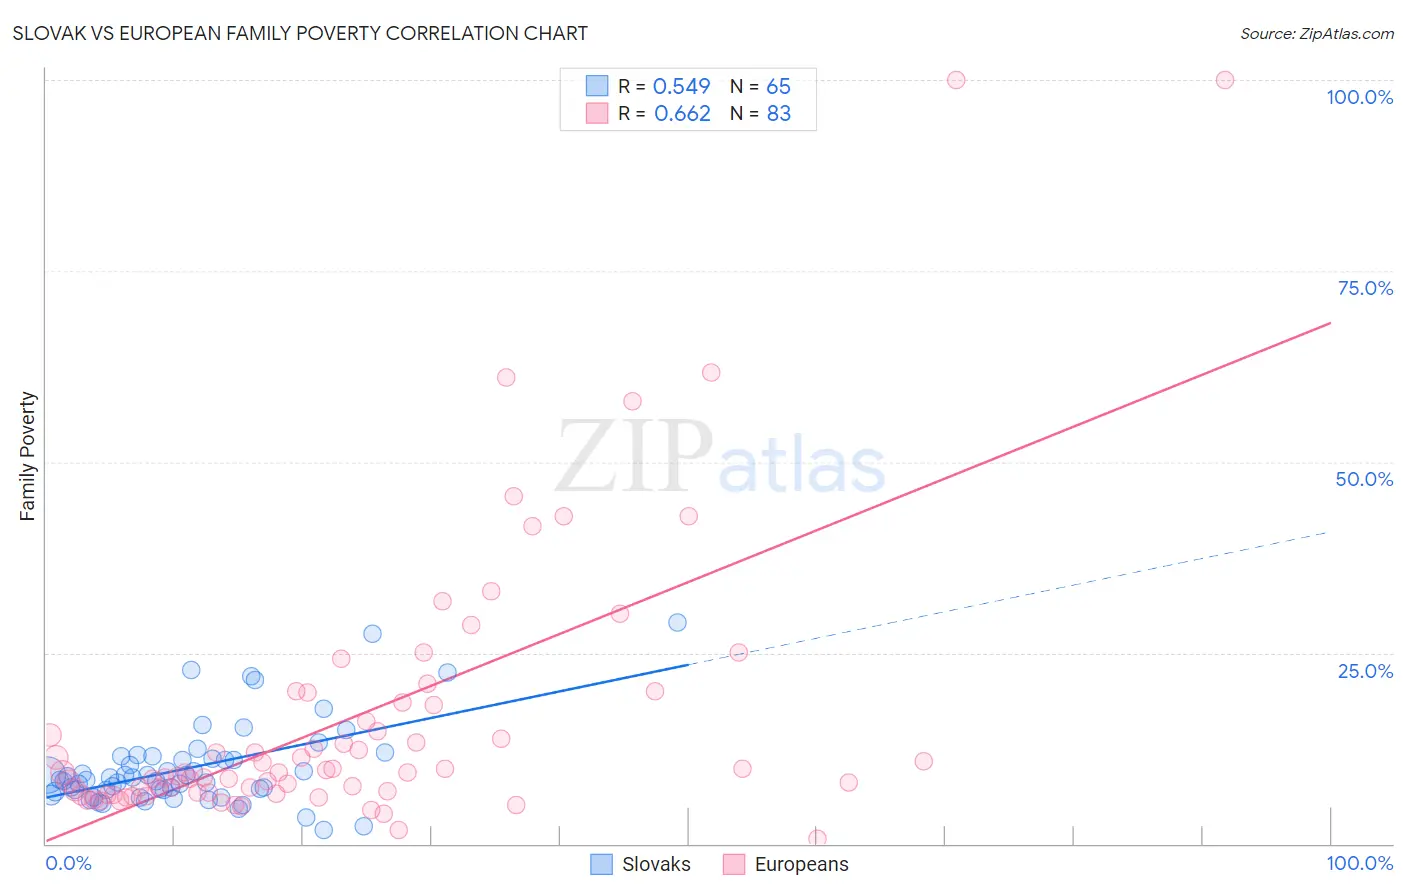 Slovak vs European Family Poverty